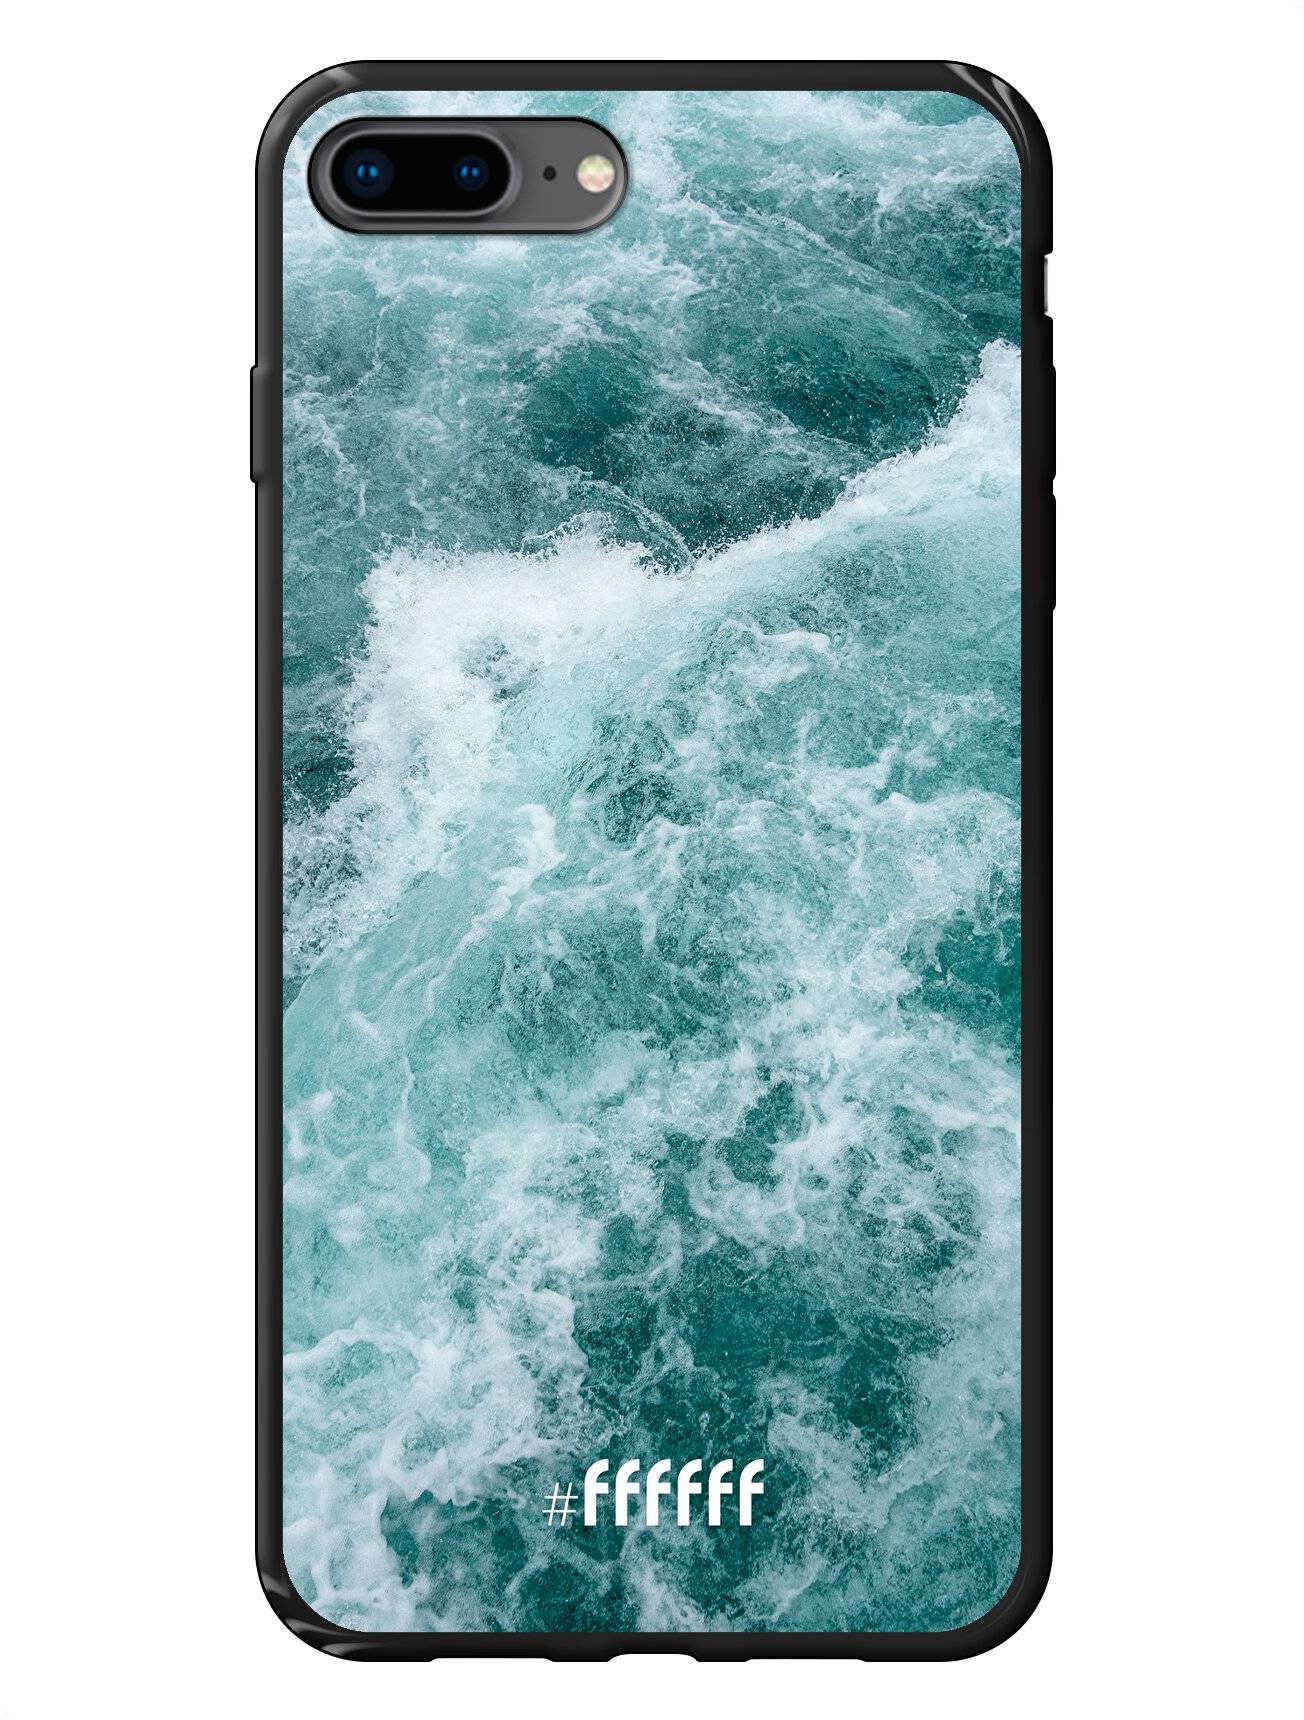 Whitecap Waves iPhone 7 Plus